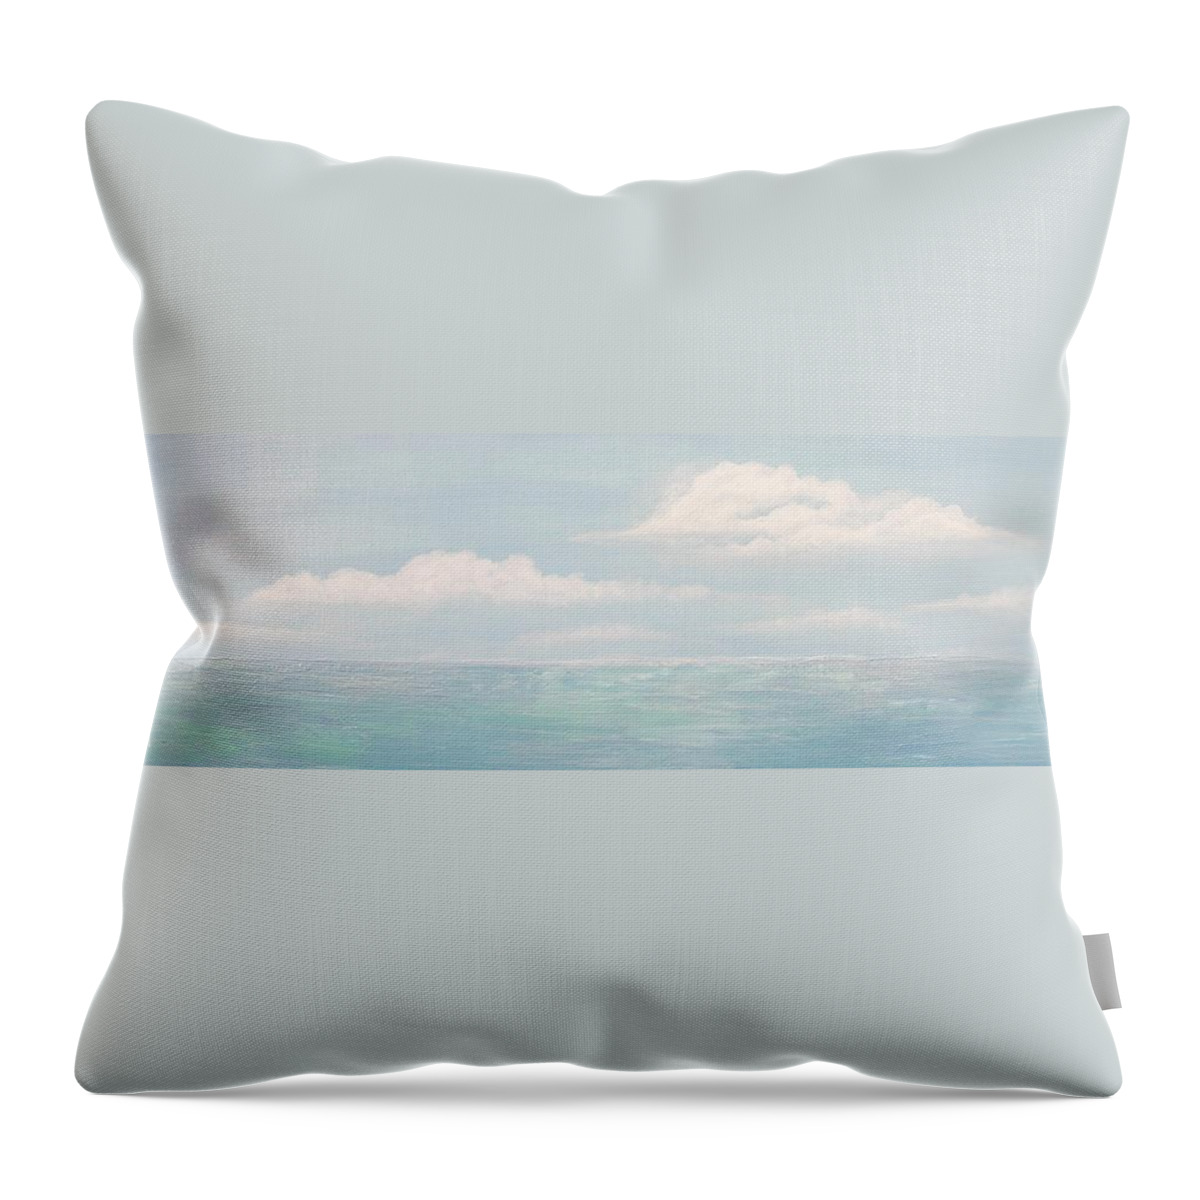 Blue Throw Pillow featuring the painting Summer Breeze by Mishel Vanderten